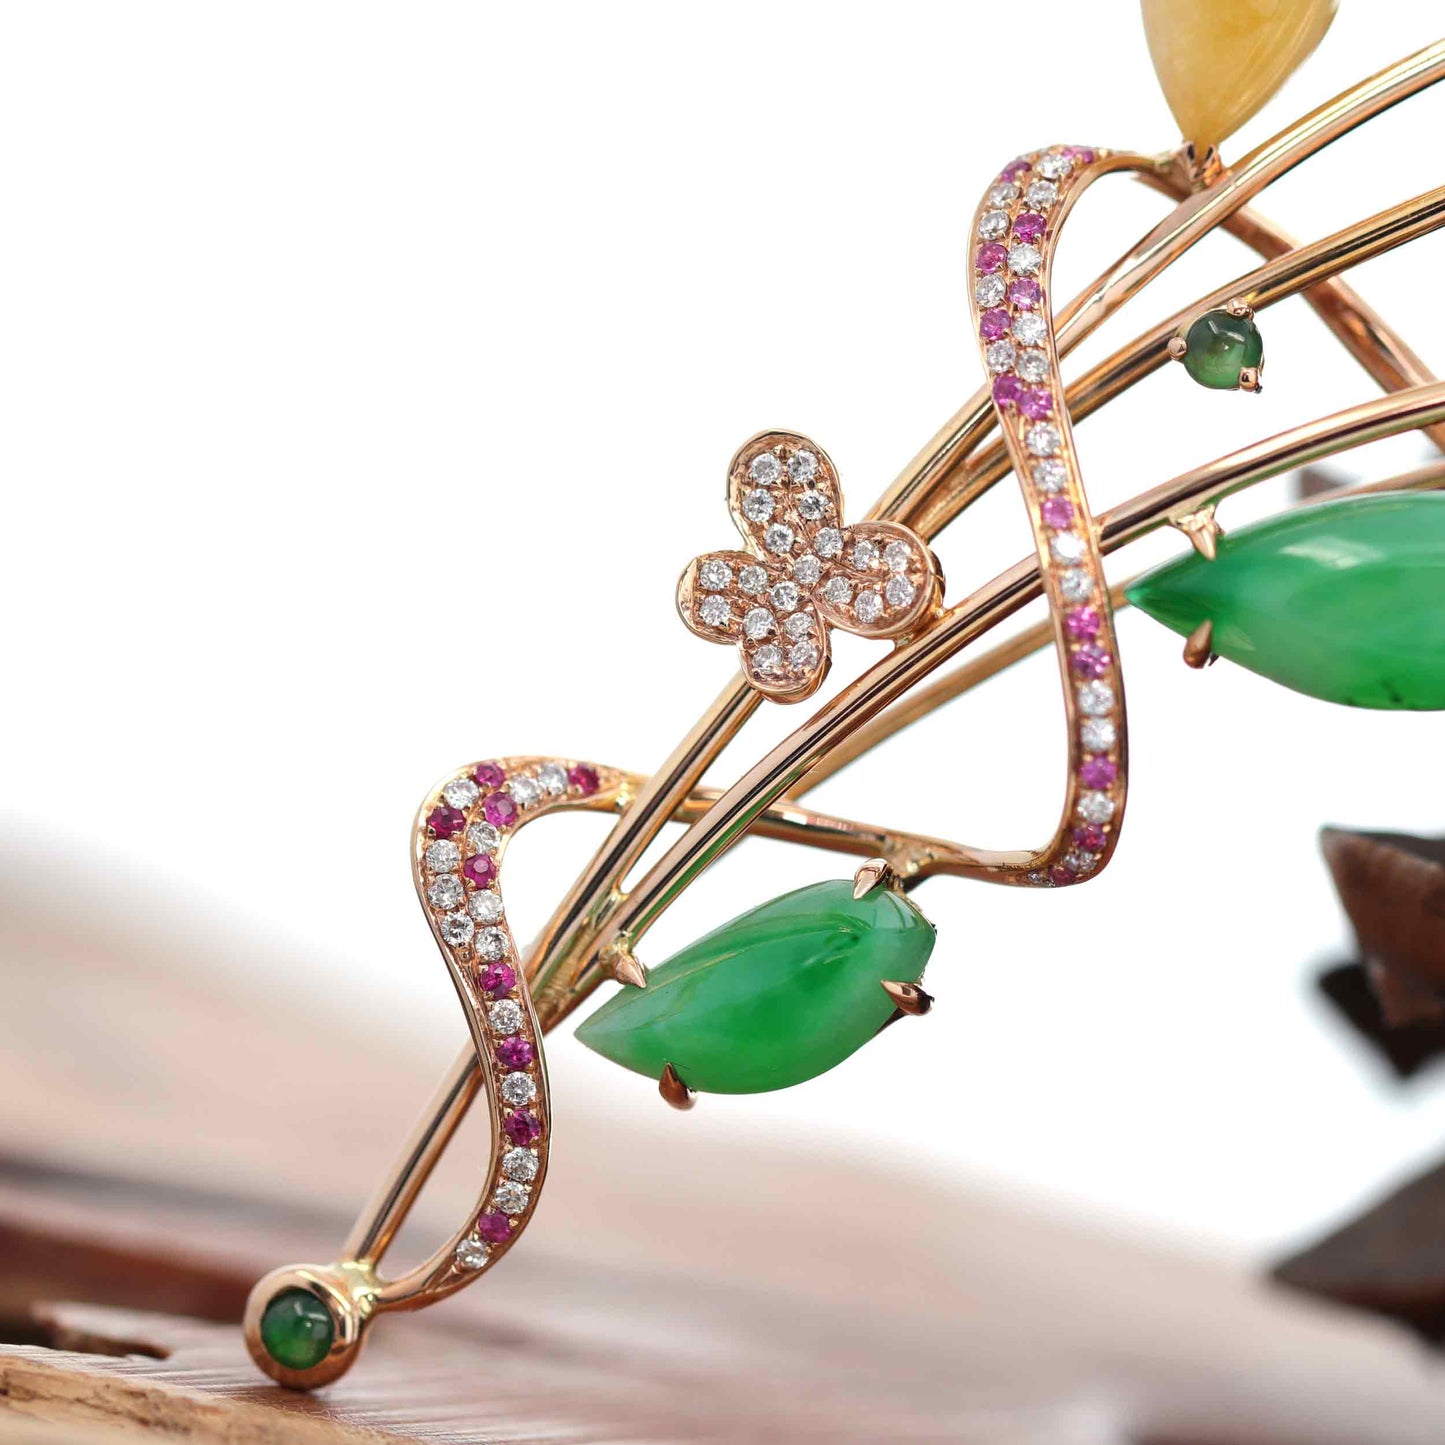 RealJade® Co. High-End 18K Rose Gold Genuine Imperial Jadeite Jade Pendant & Brooch with Diamonds